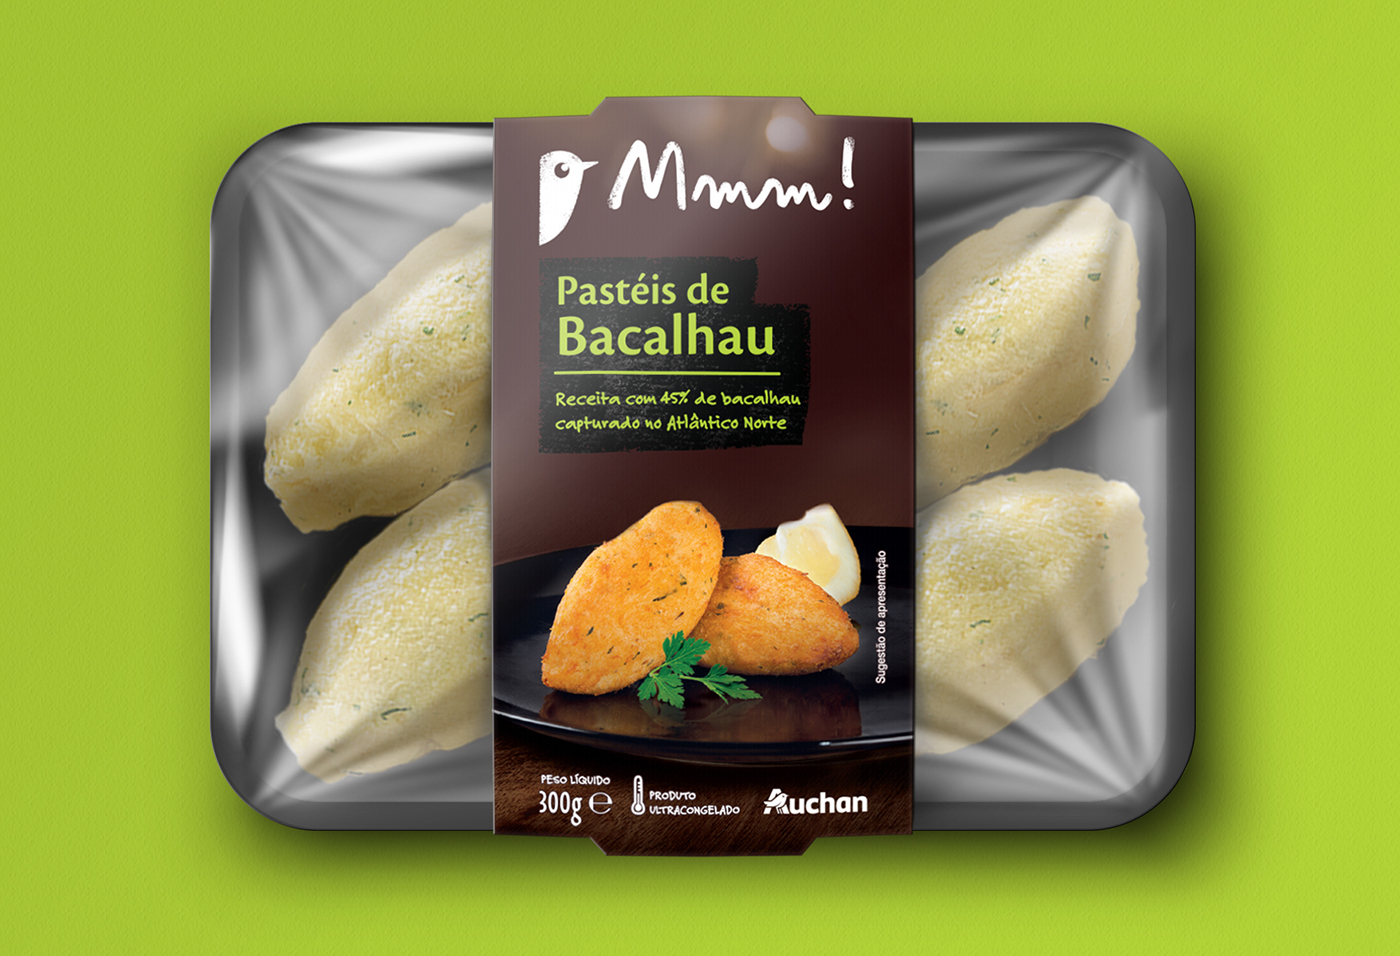 mmm! premium Auchan Label codfish print Packaging bacalhau pastéis de bacalhau food photo